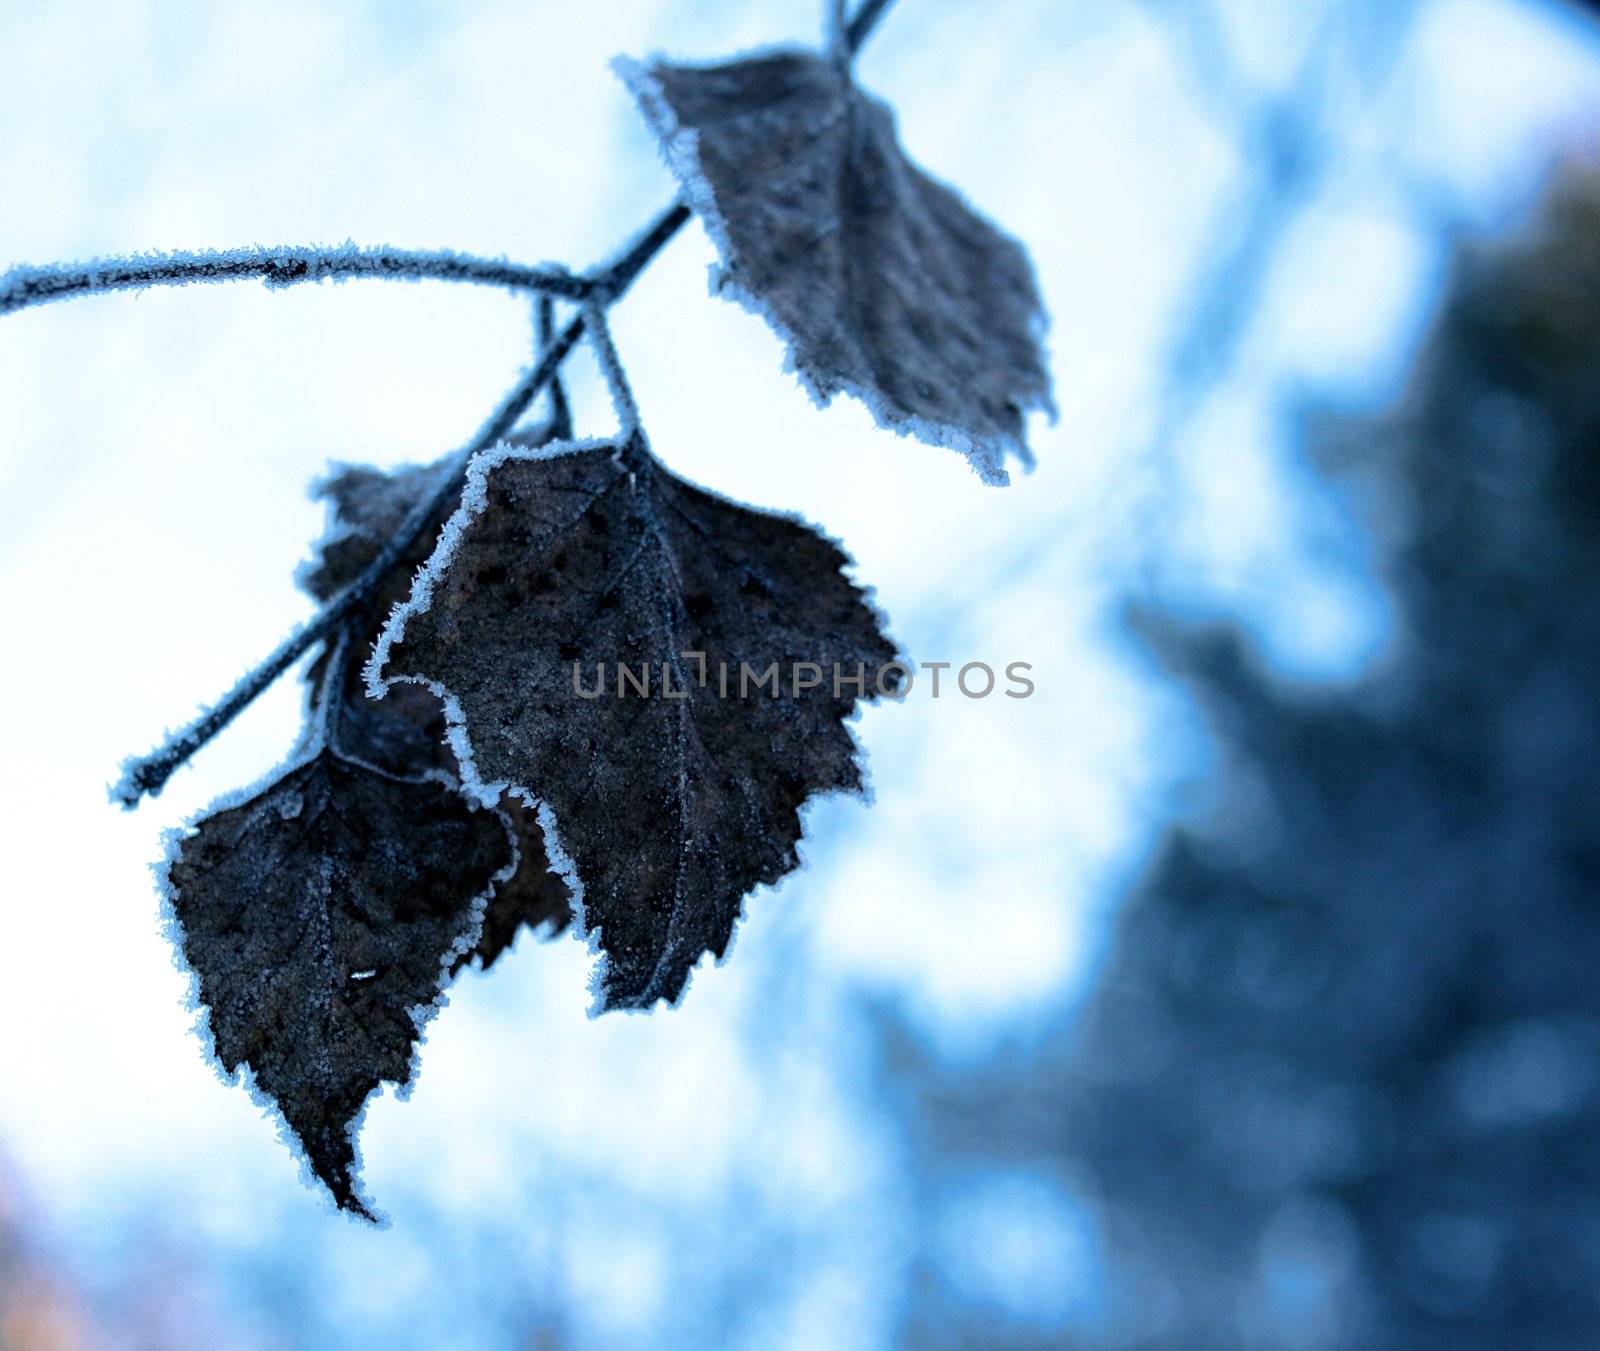 Frosty leaf #1 by sundaune